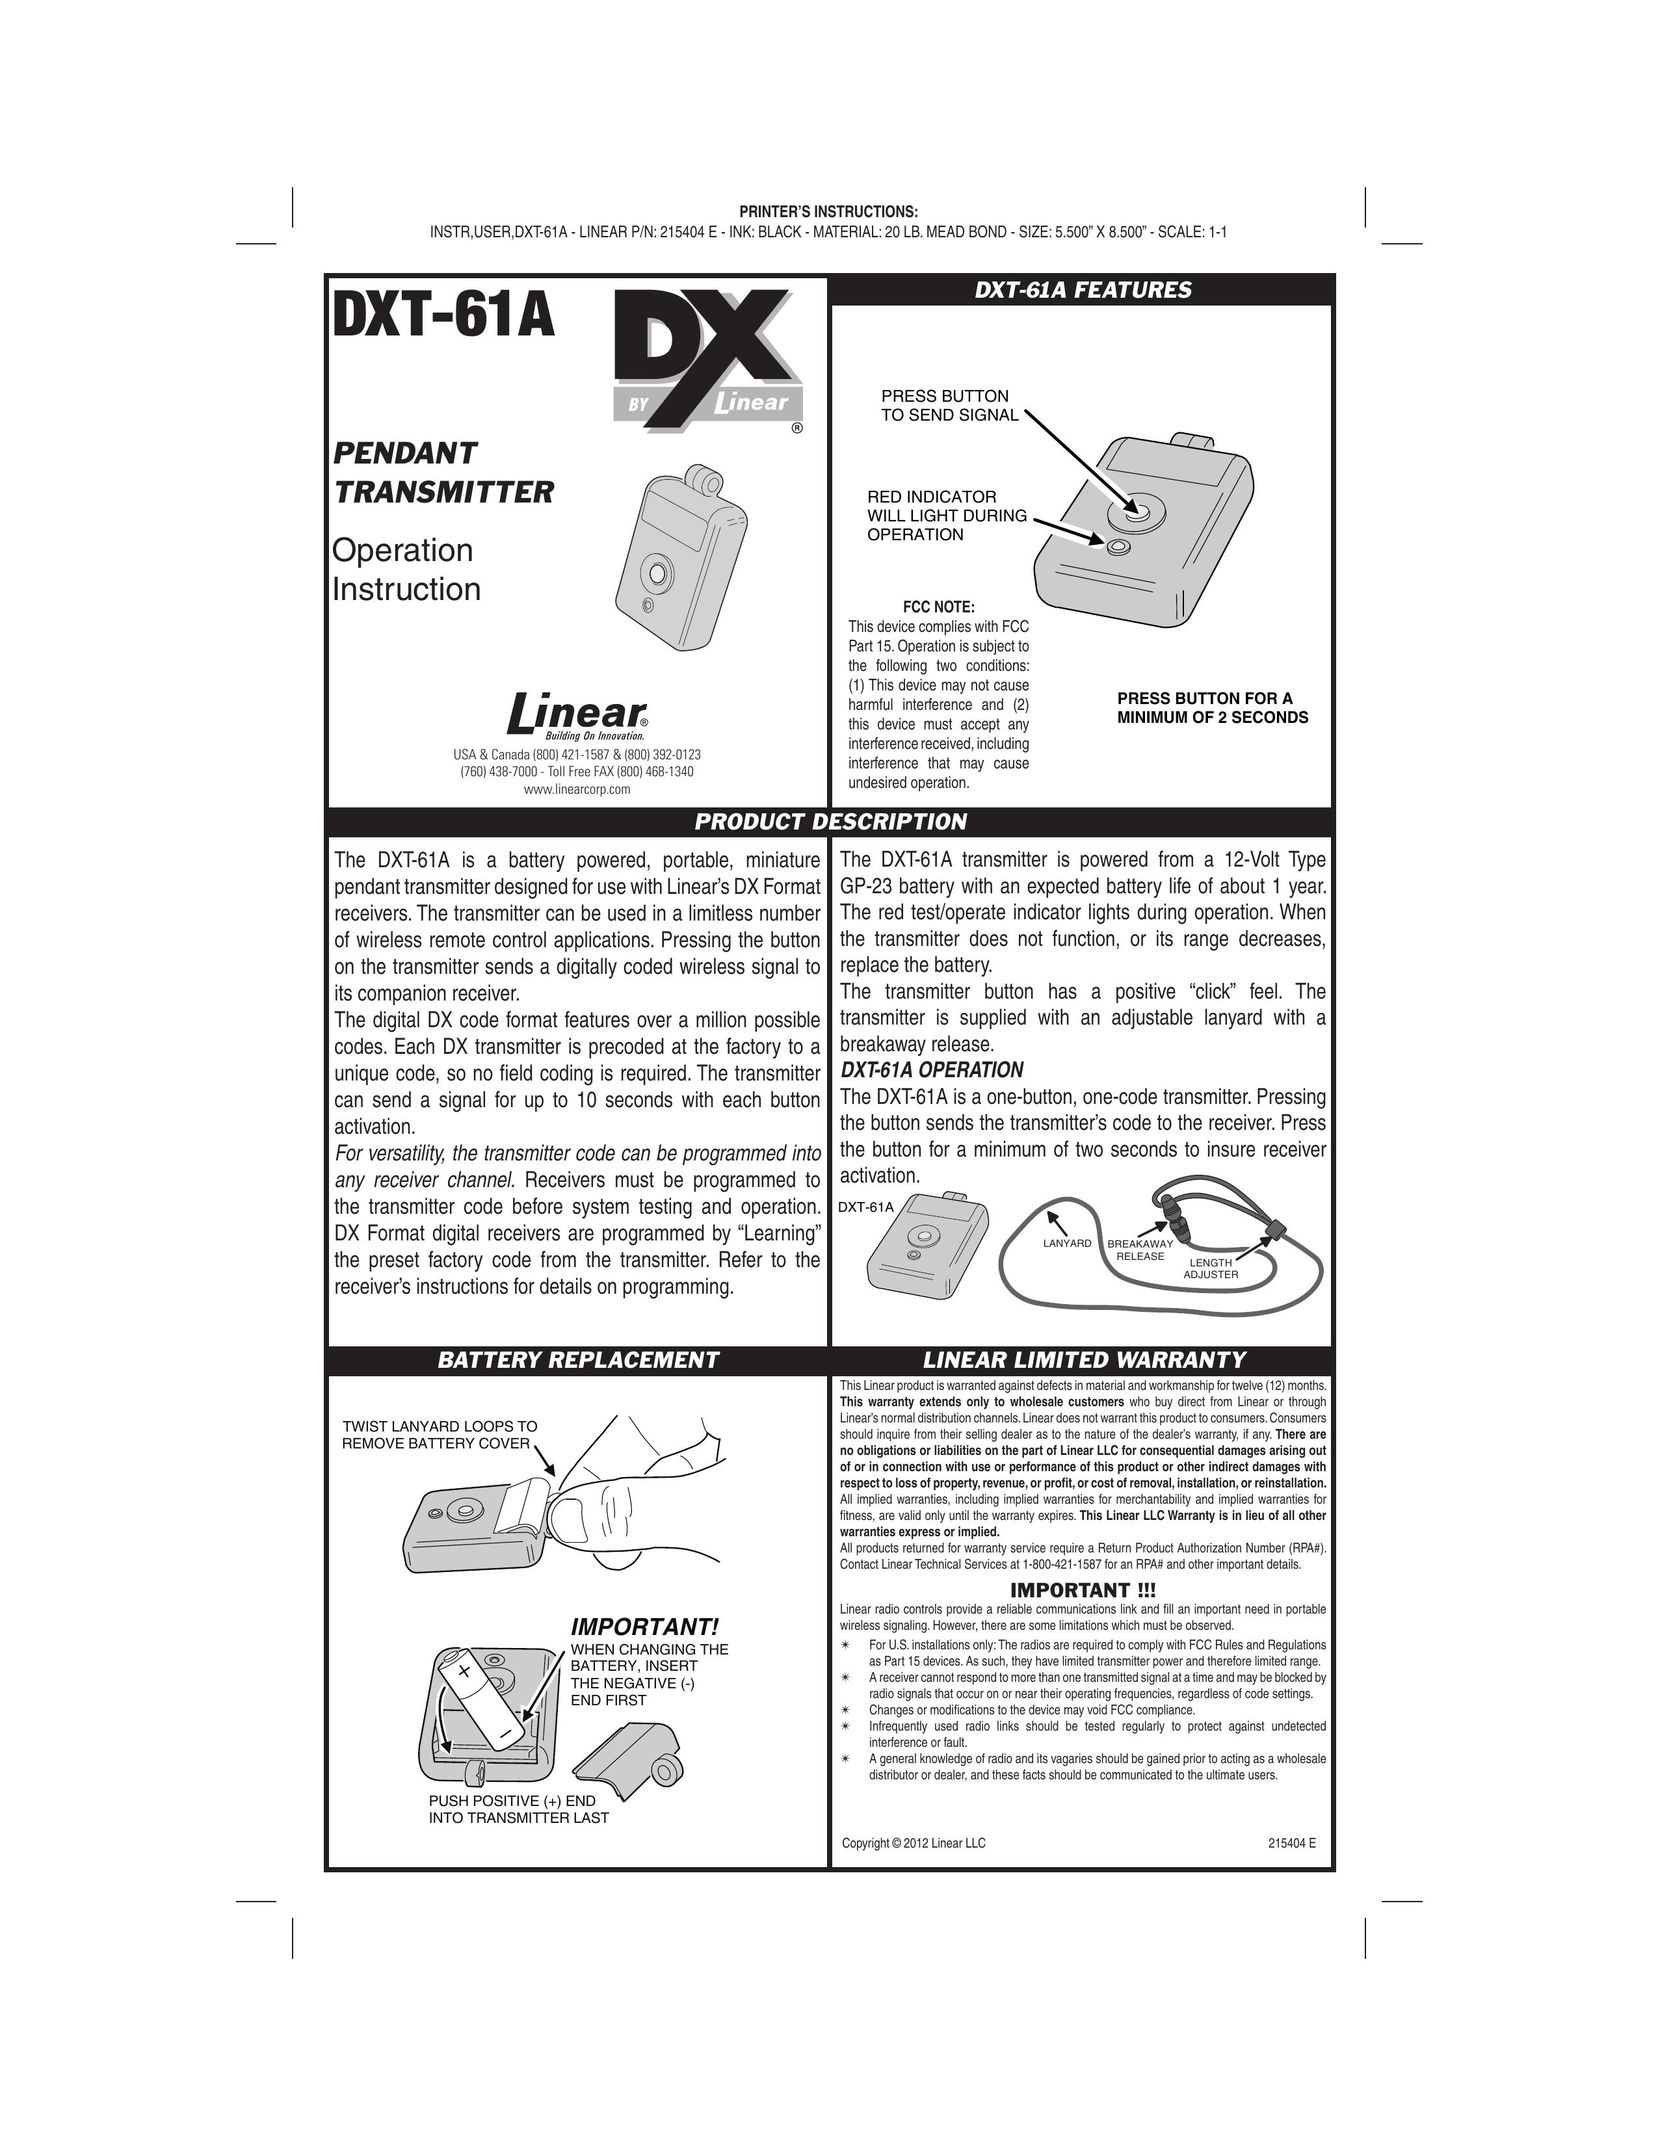 Linear DXT-61A Satellite Radio User Manual